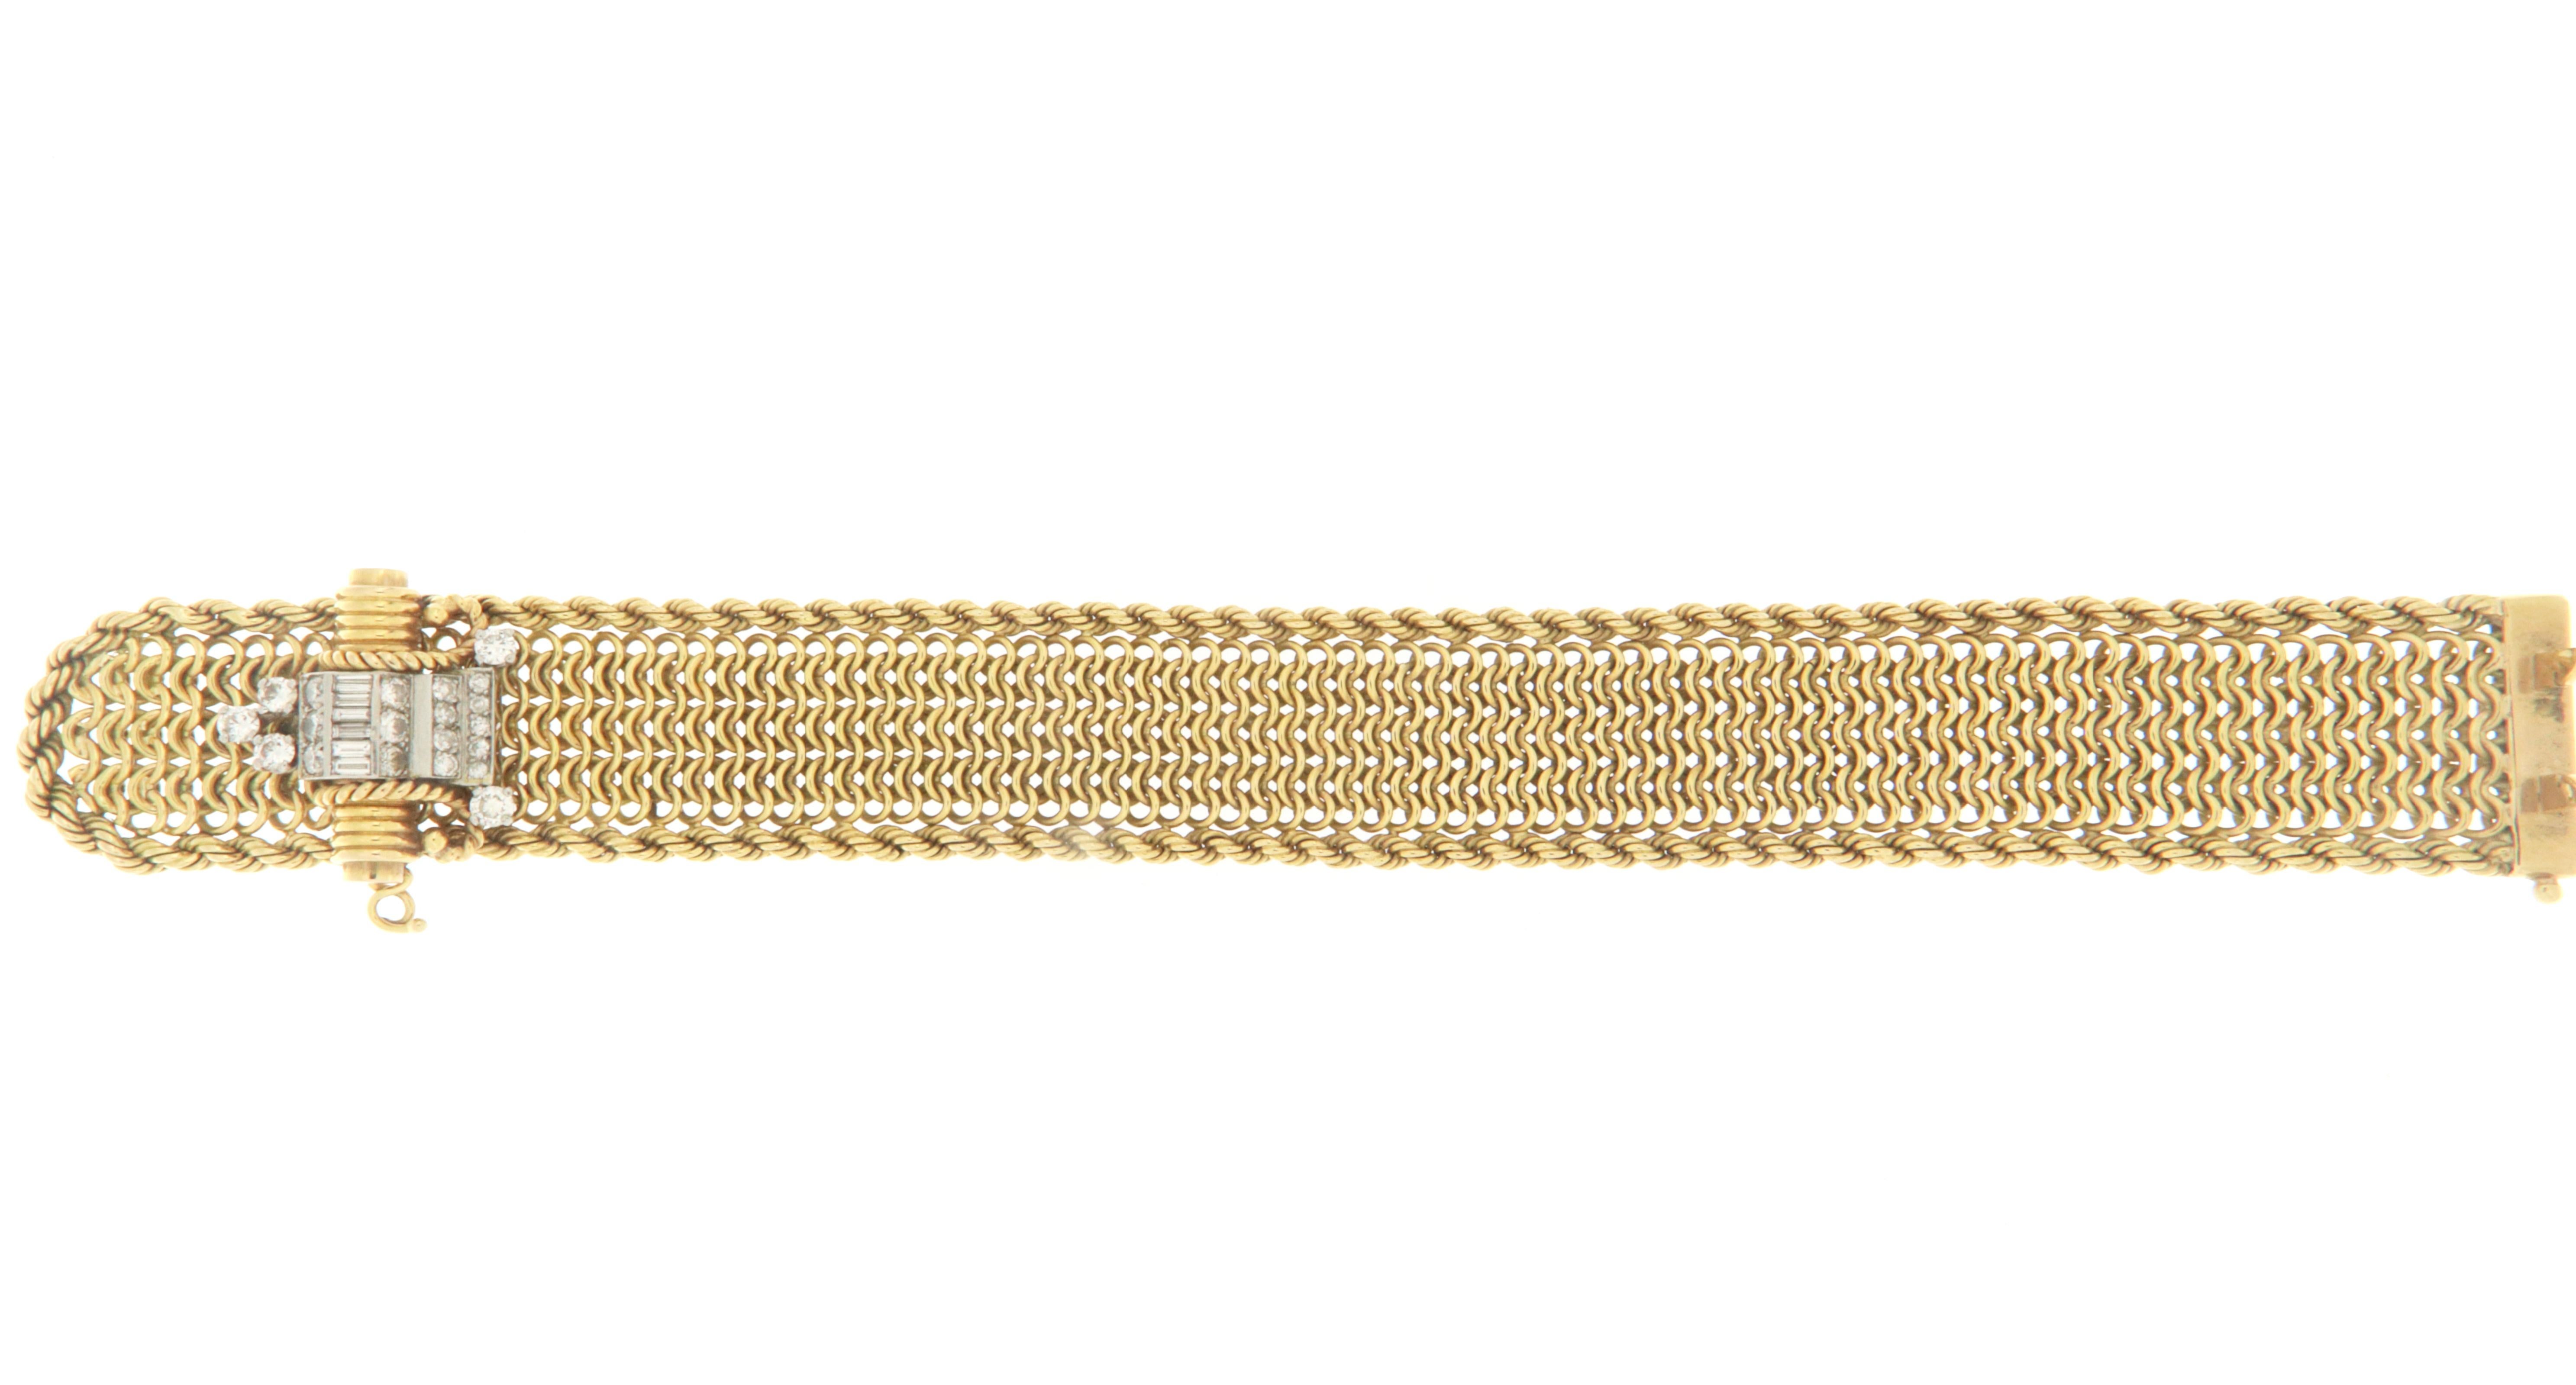 Mouboussin Diamonds 18 Karat Yellow Gold Cuff Bracelet 5